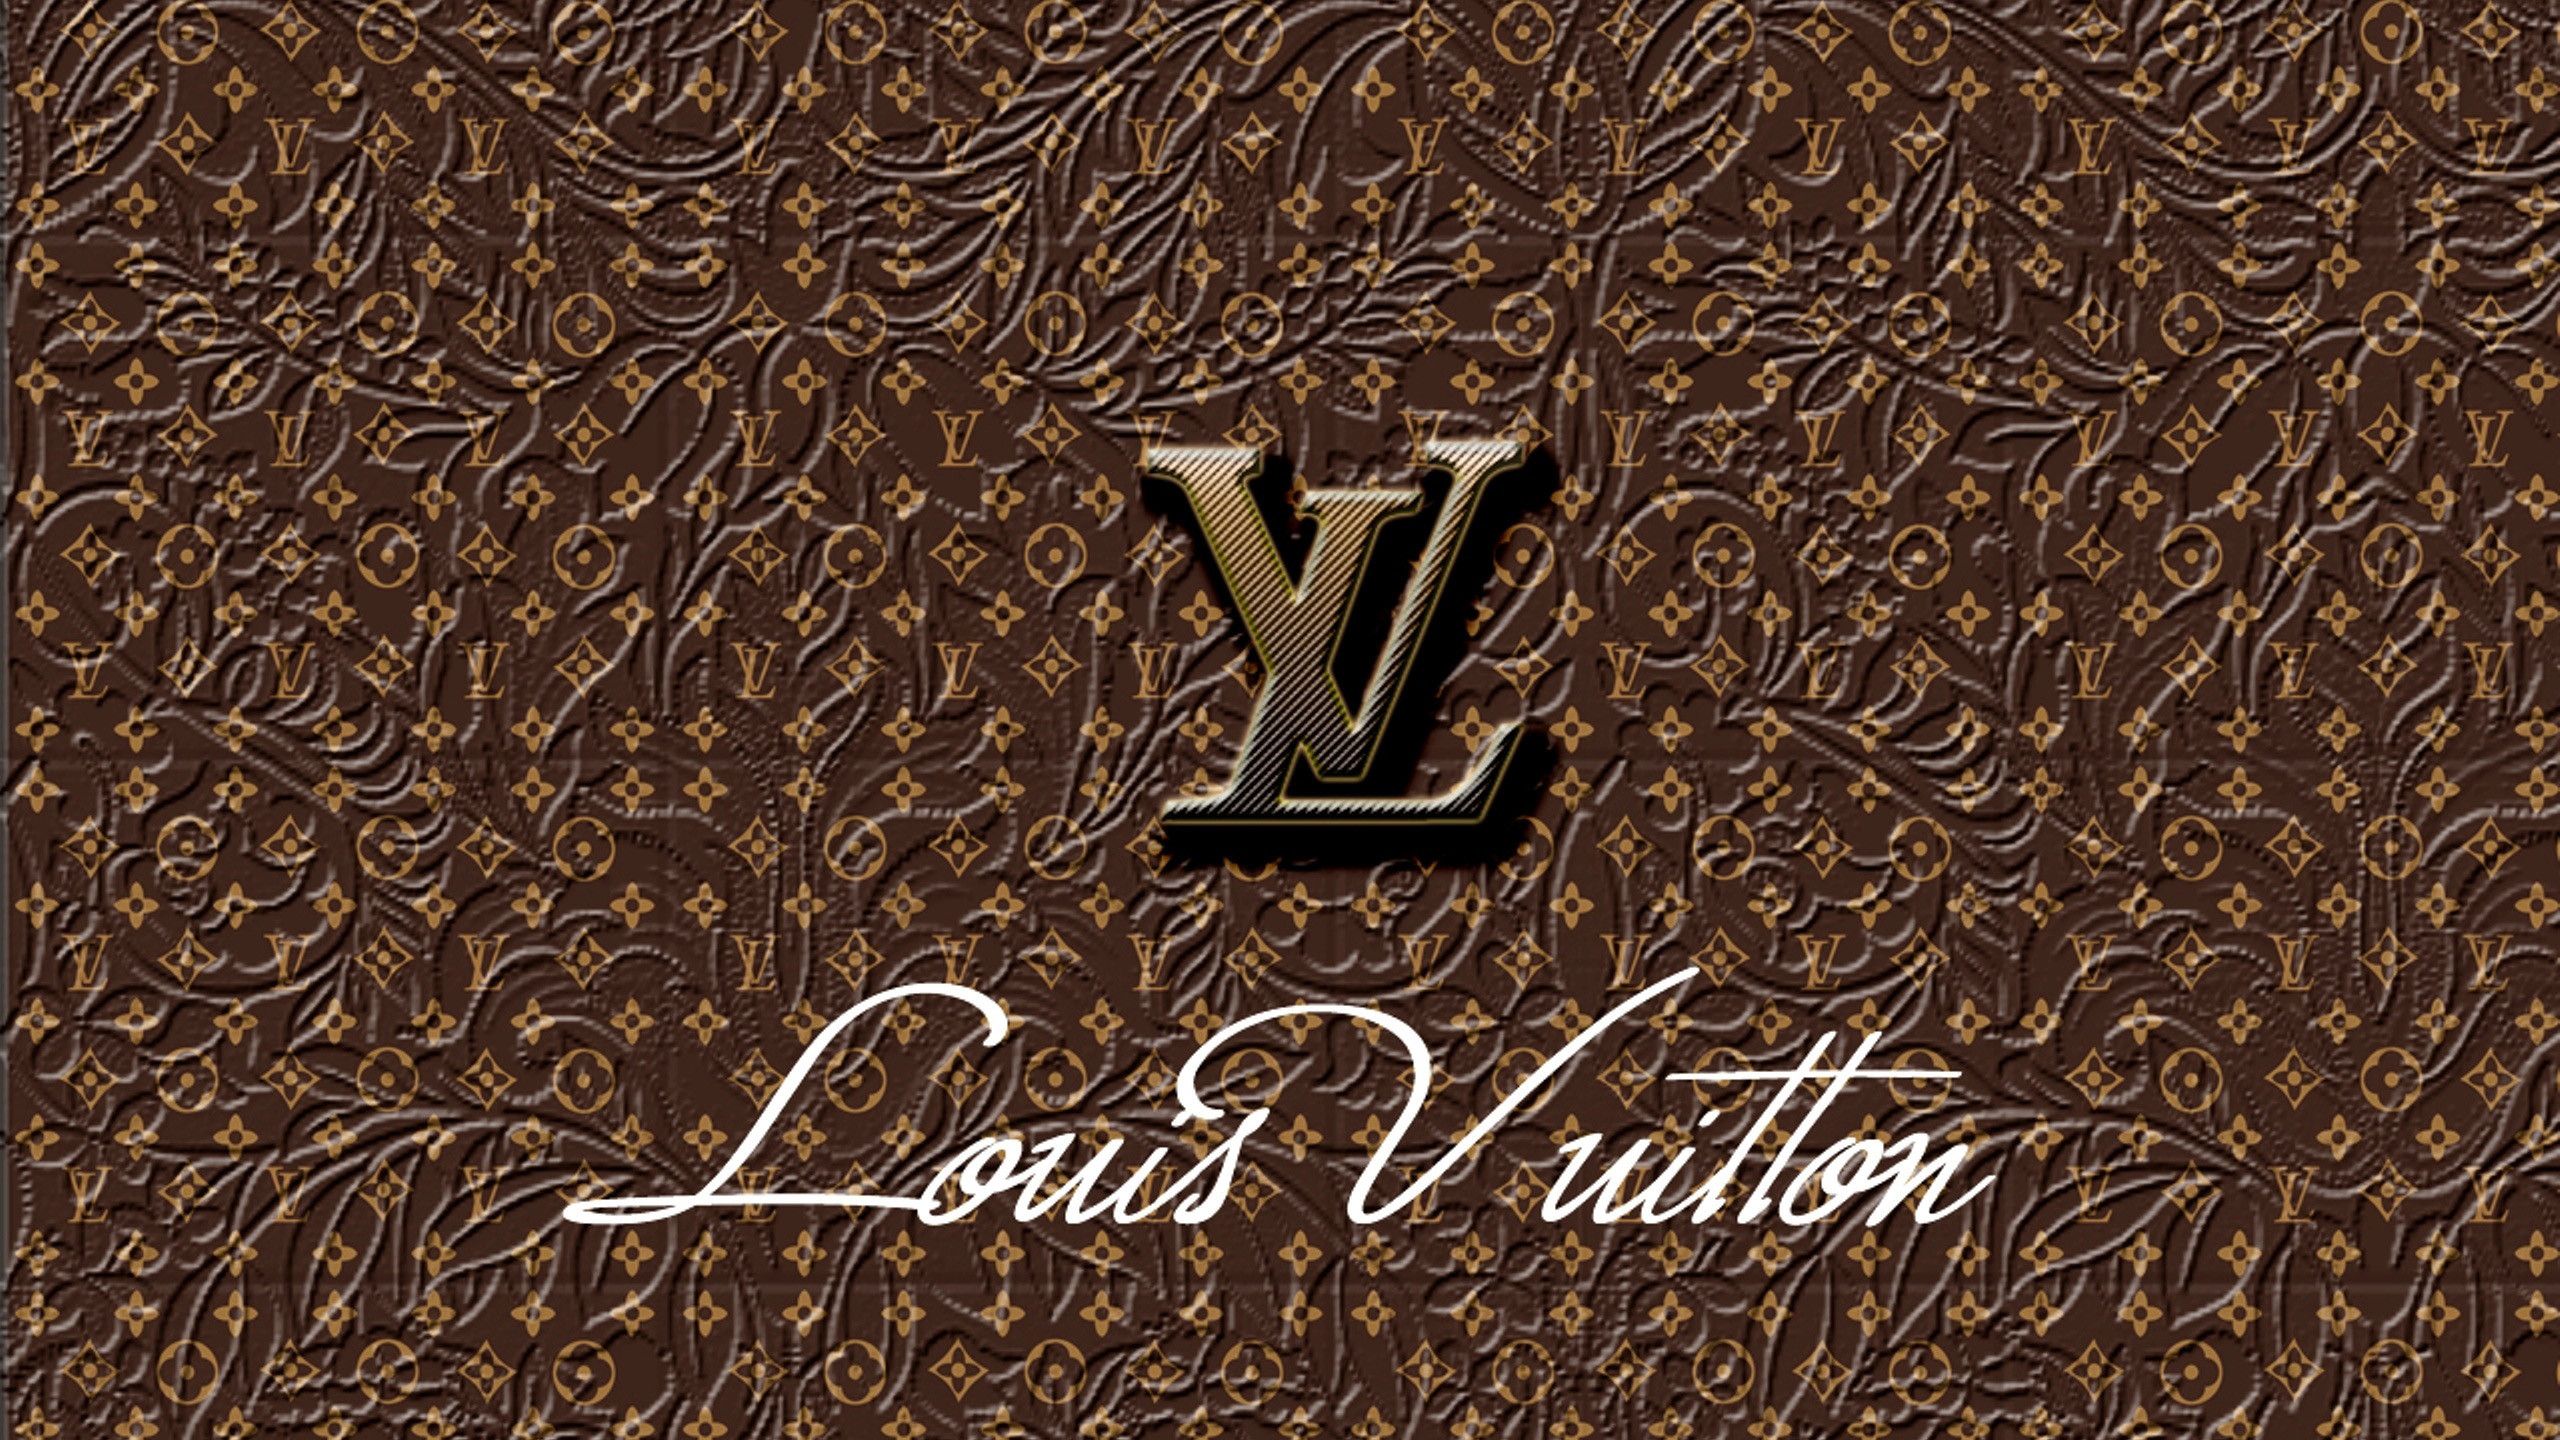 Louis Vuitton Wallpaper Stock Illustrations – 32 Louis Vuitton